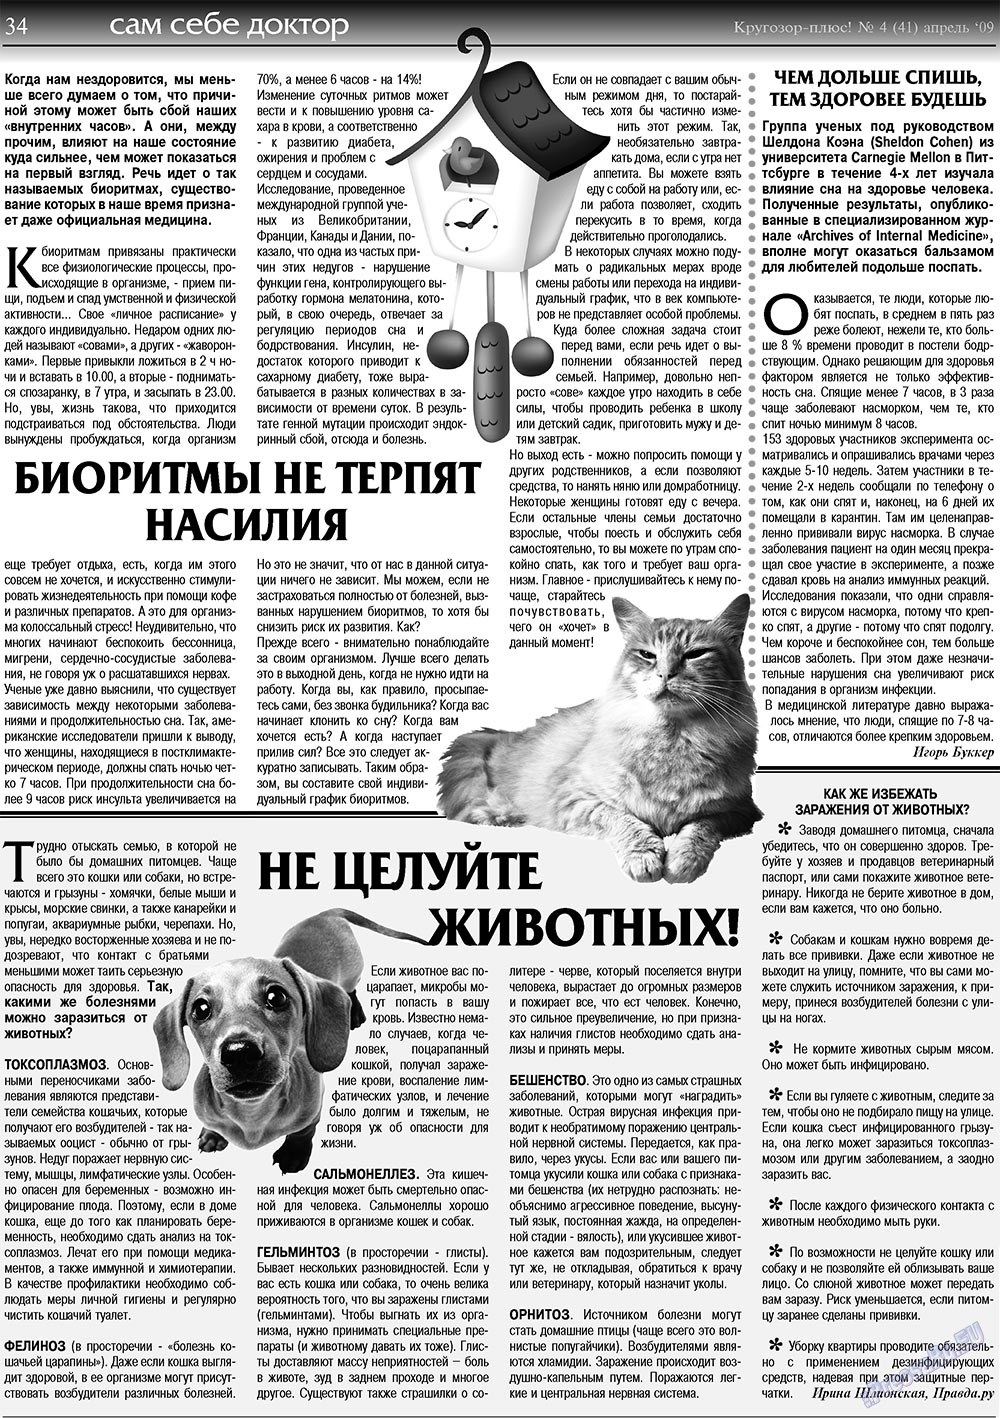 Кругозор плюс! (газета). 2009 год, номер 4, стр. 34